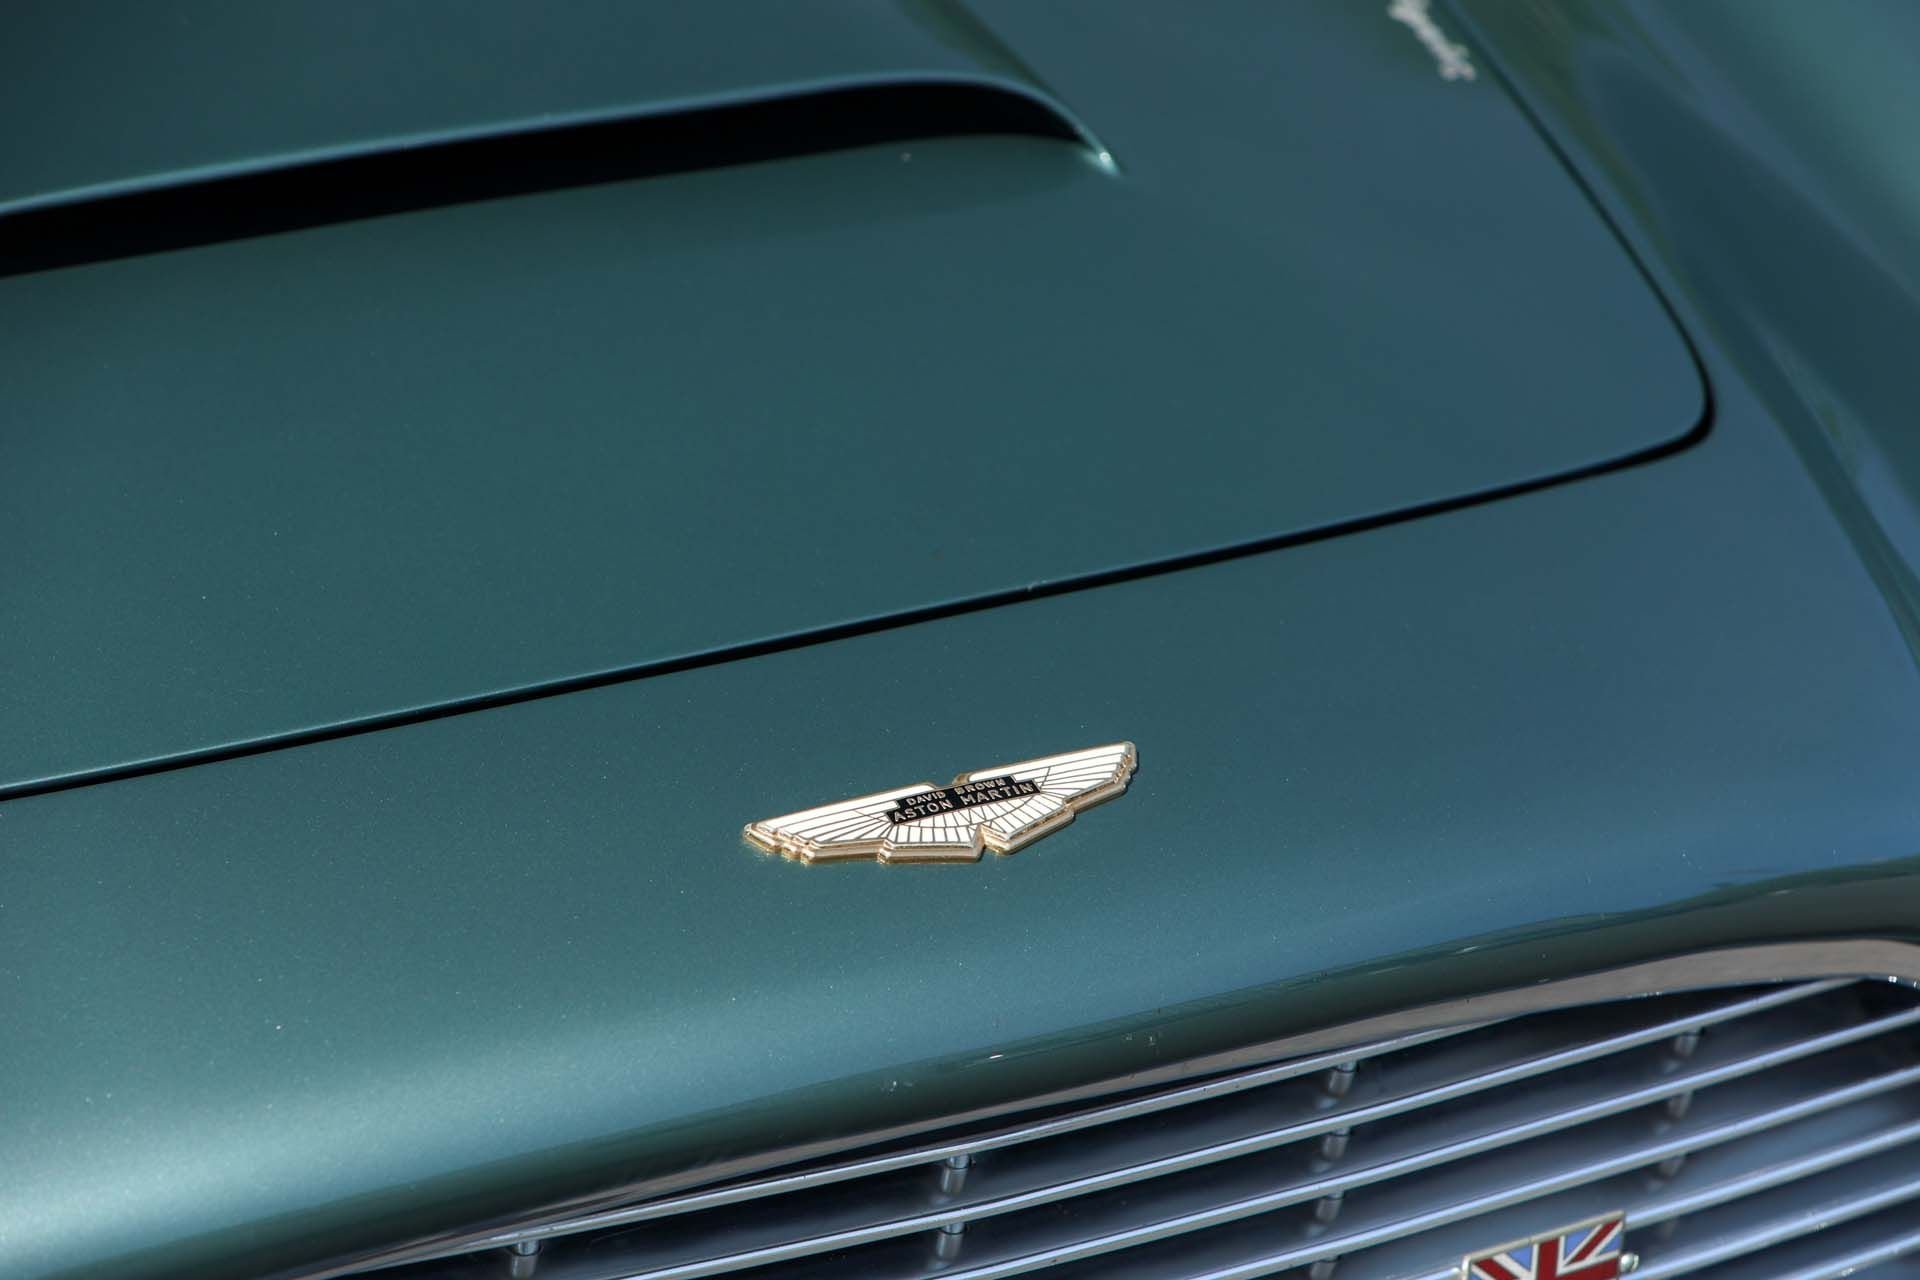 For Sale 1962 Aston Martin DB4 Series IV